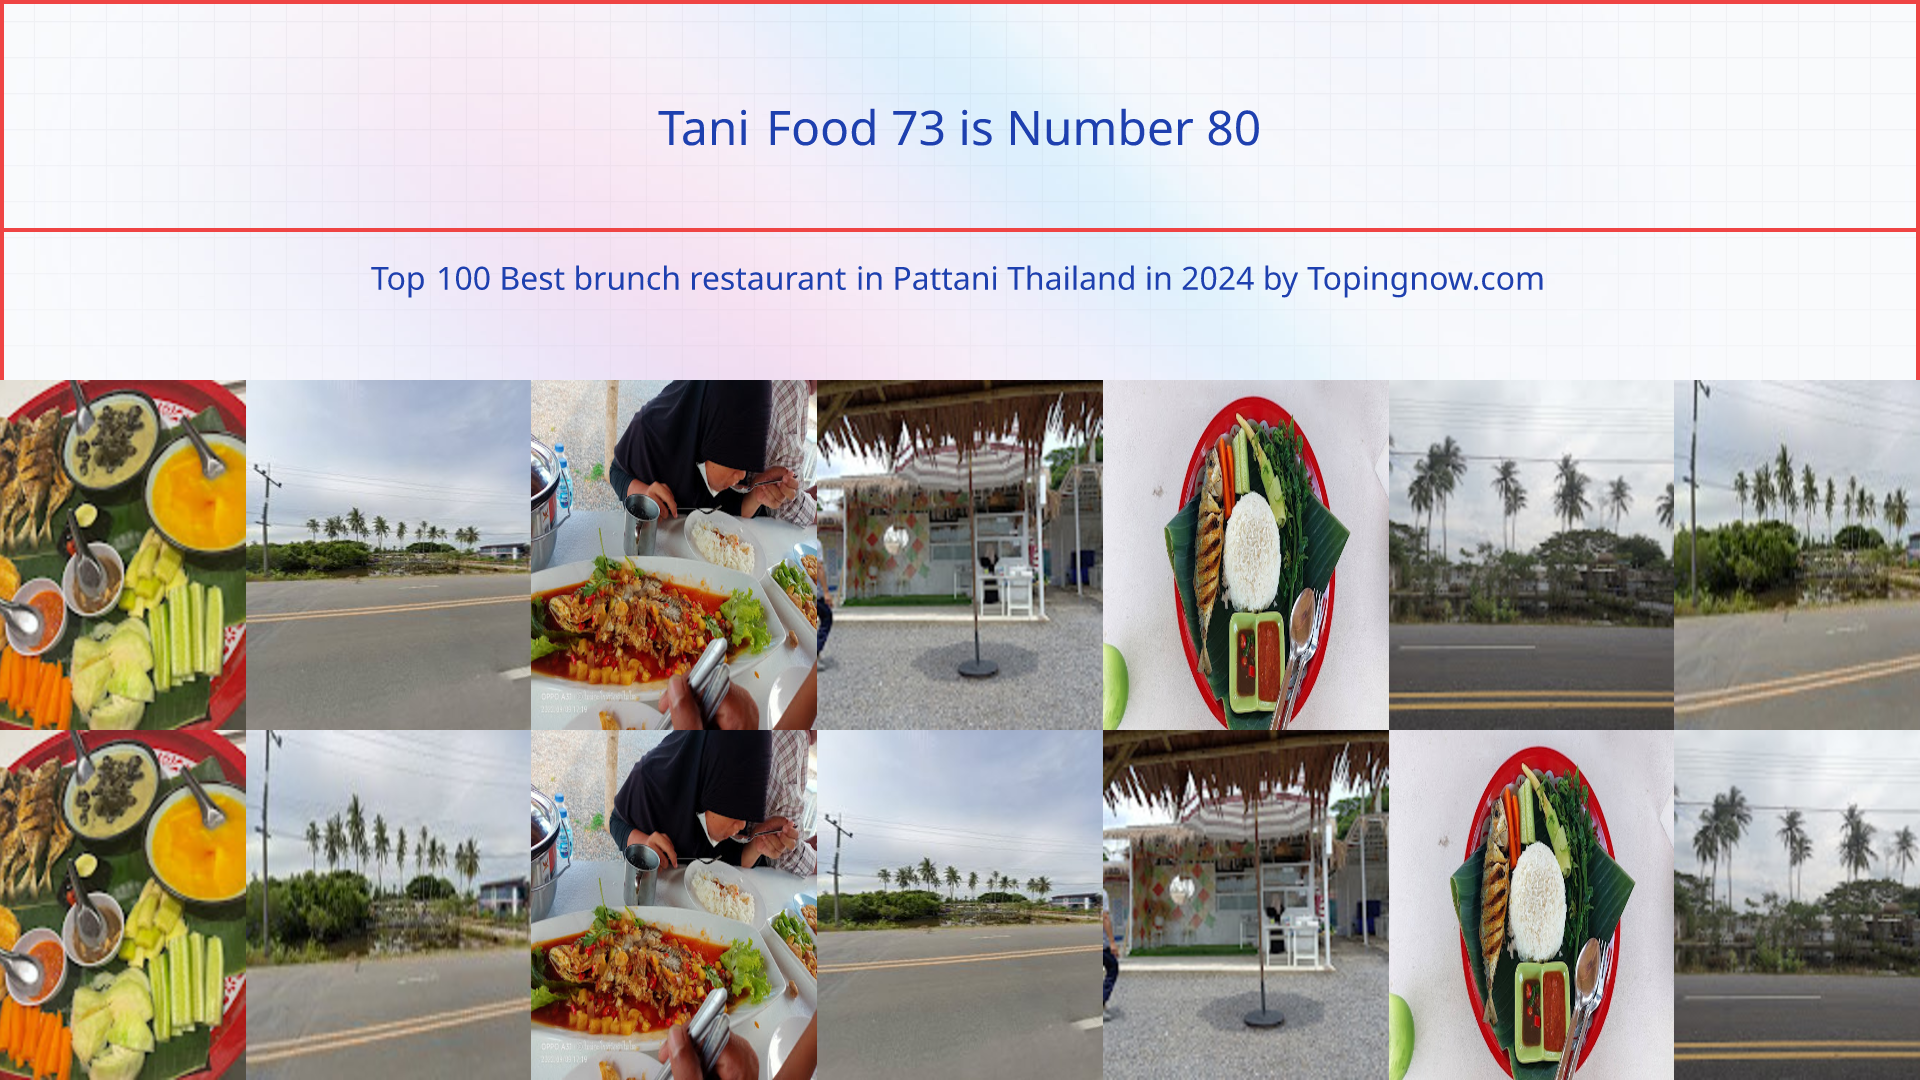 Tani Food 73: Top 100 Best brunch restaurant in Pattani Thailand in 2024